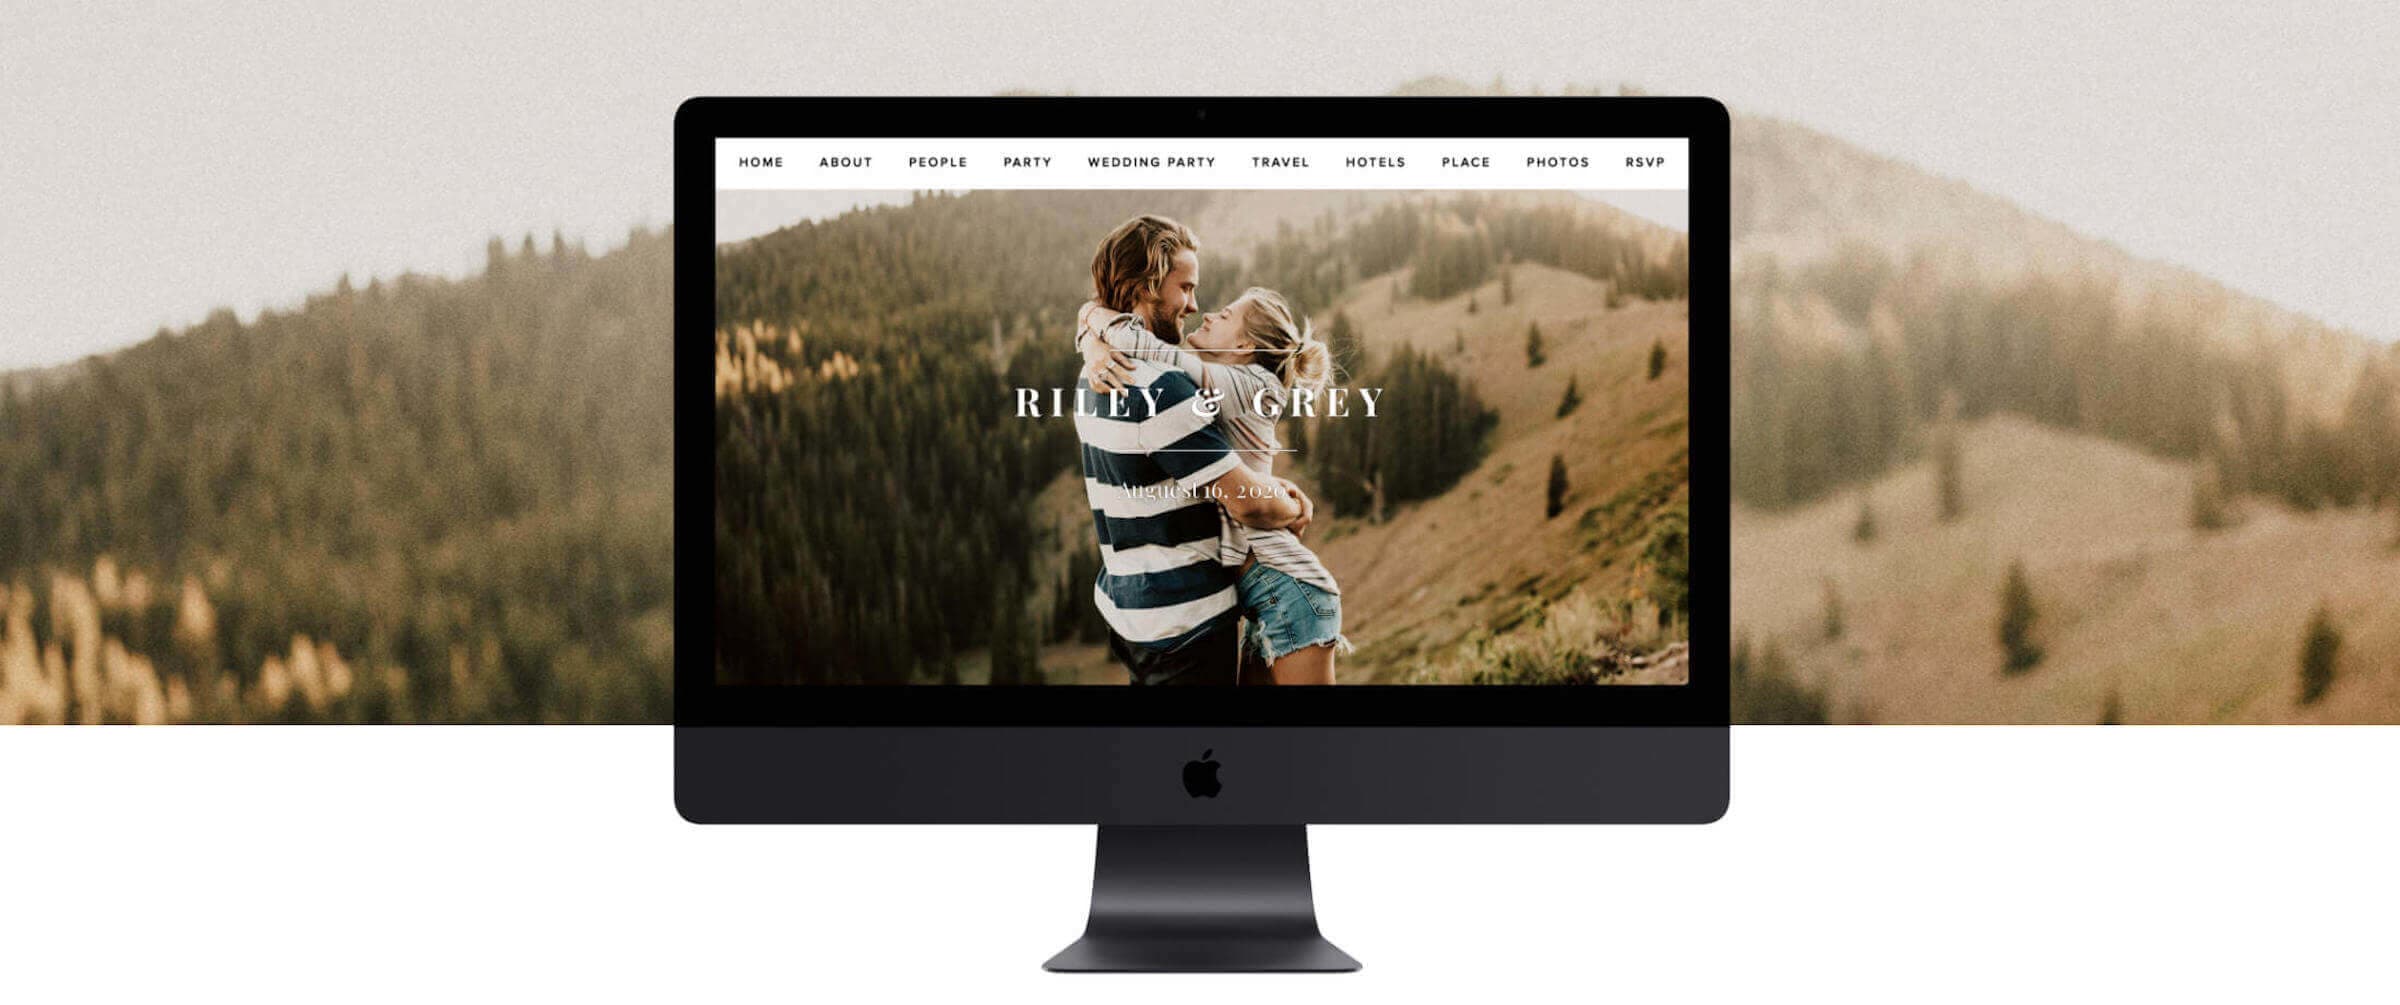 Branded Wedding Website Design Template